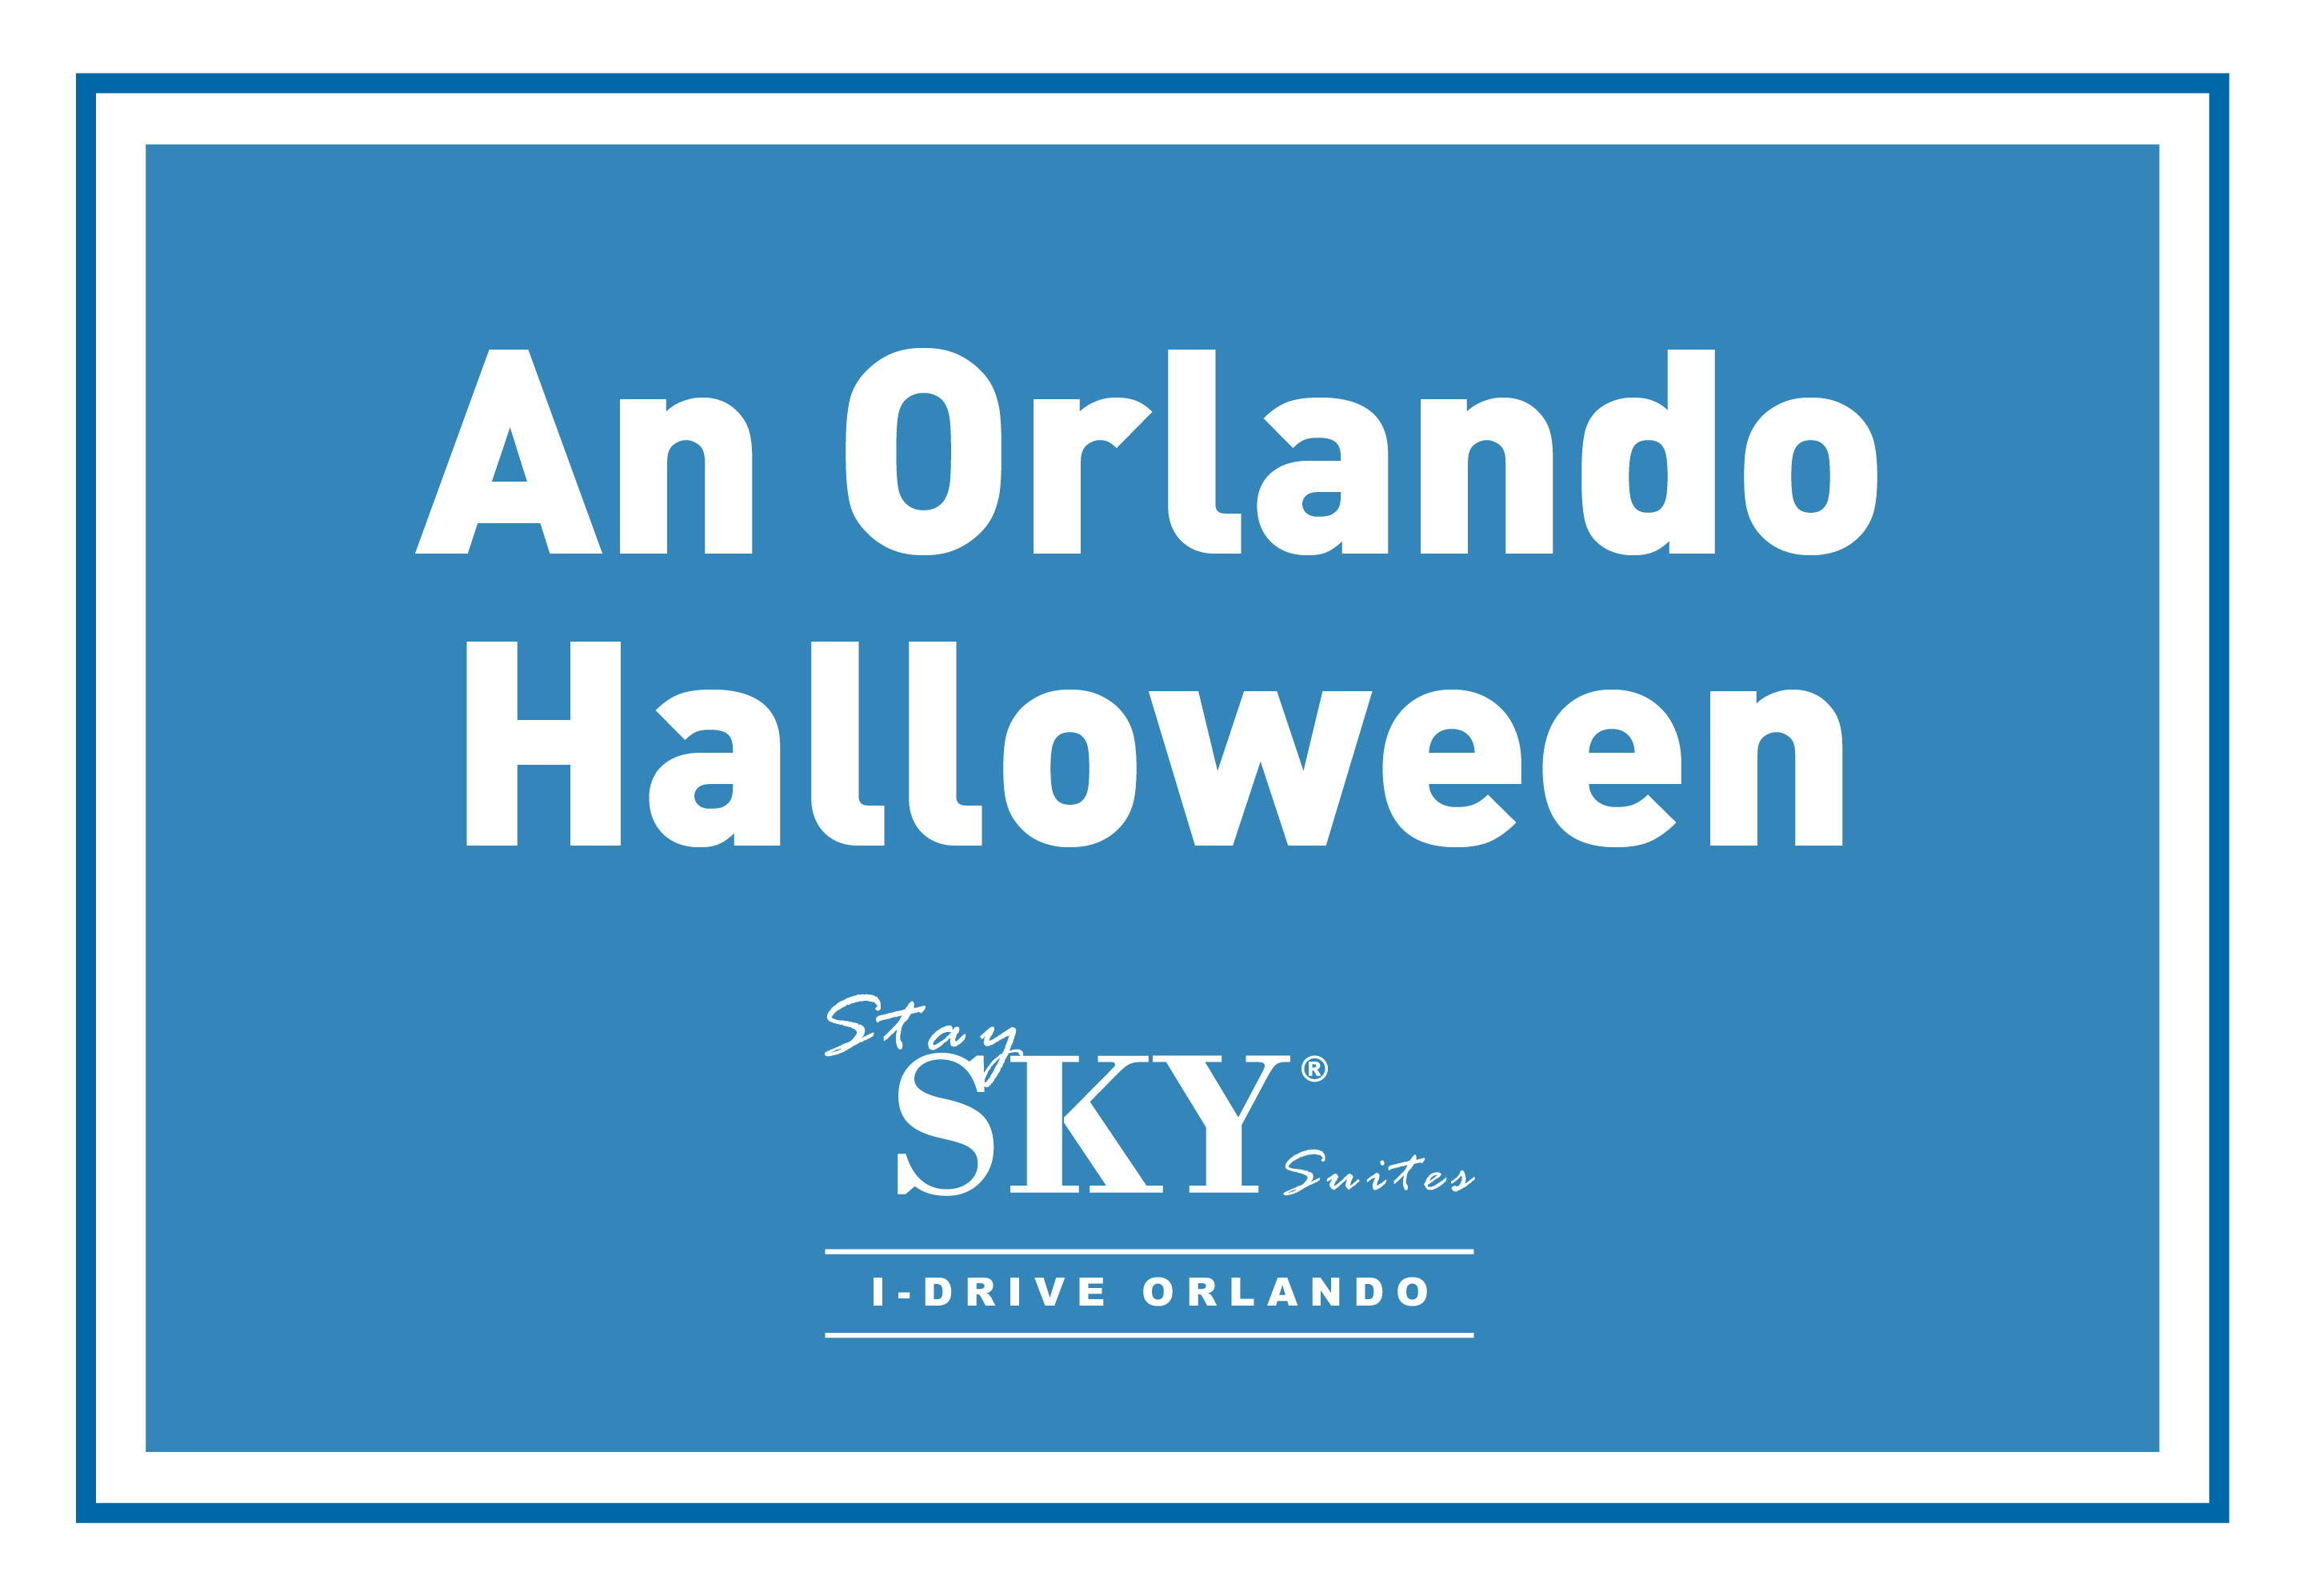 StaySky Suites I - Drive - Orlando Resorts - ORLHalloween